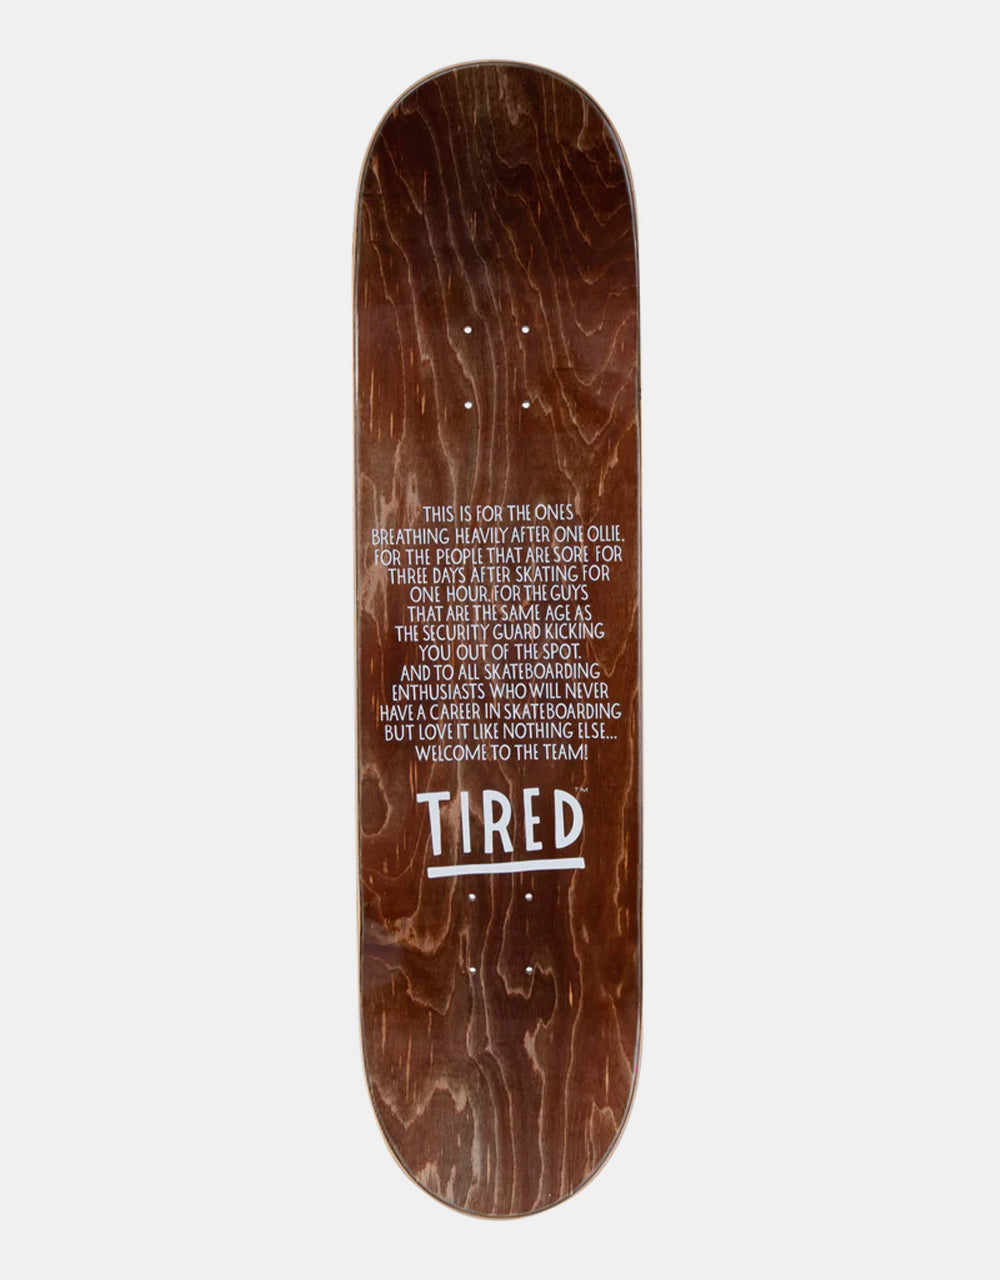 Tired Ghost 'REG' Skateboard Deck - 8.125"